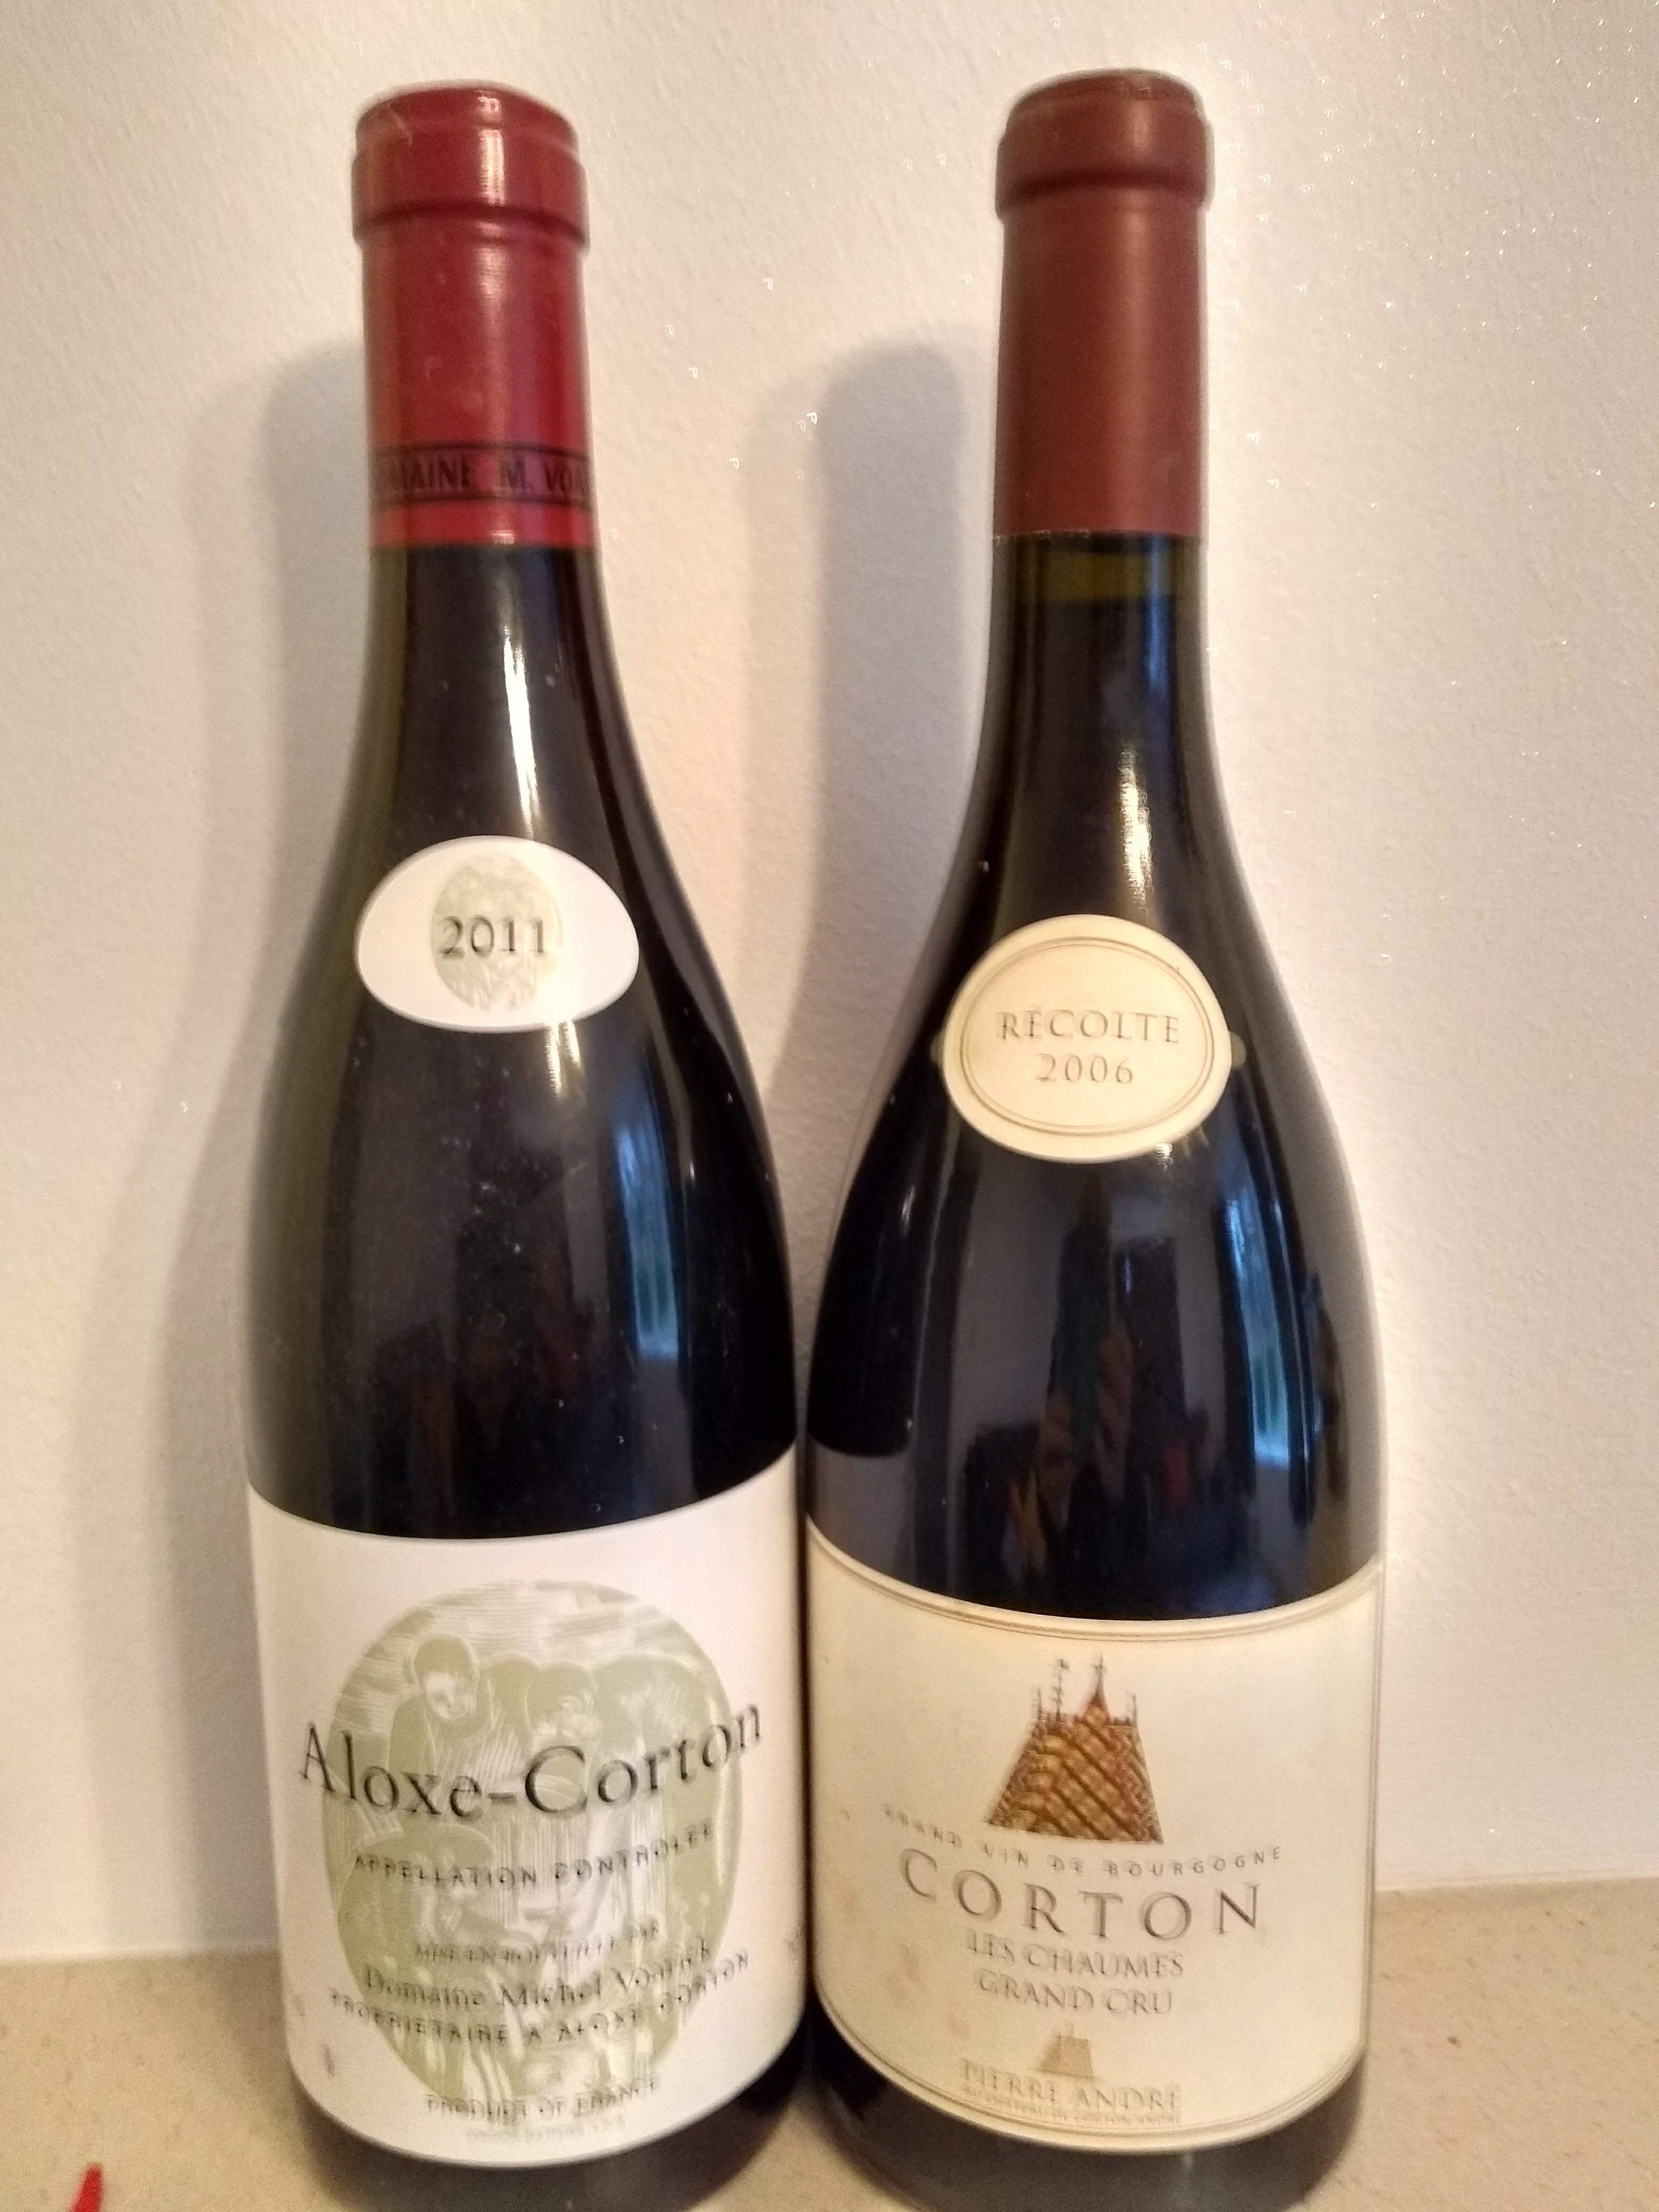 Wines from Aloxe-Corton